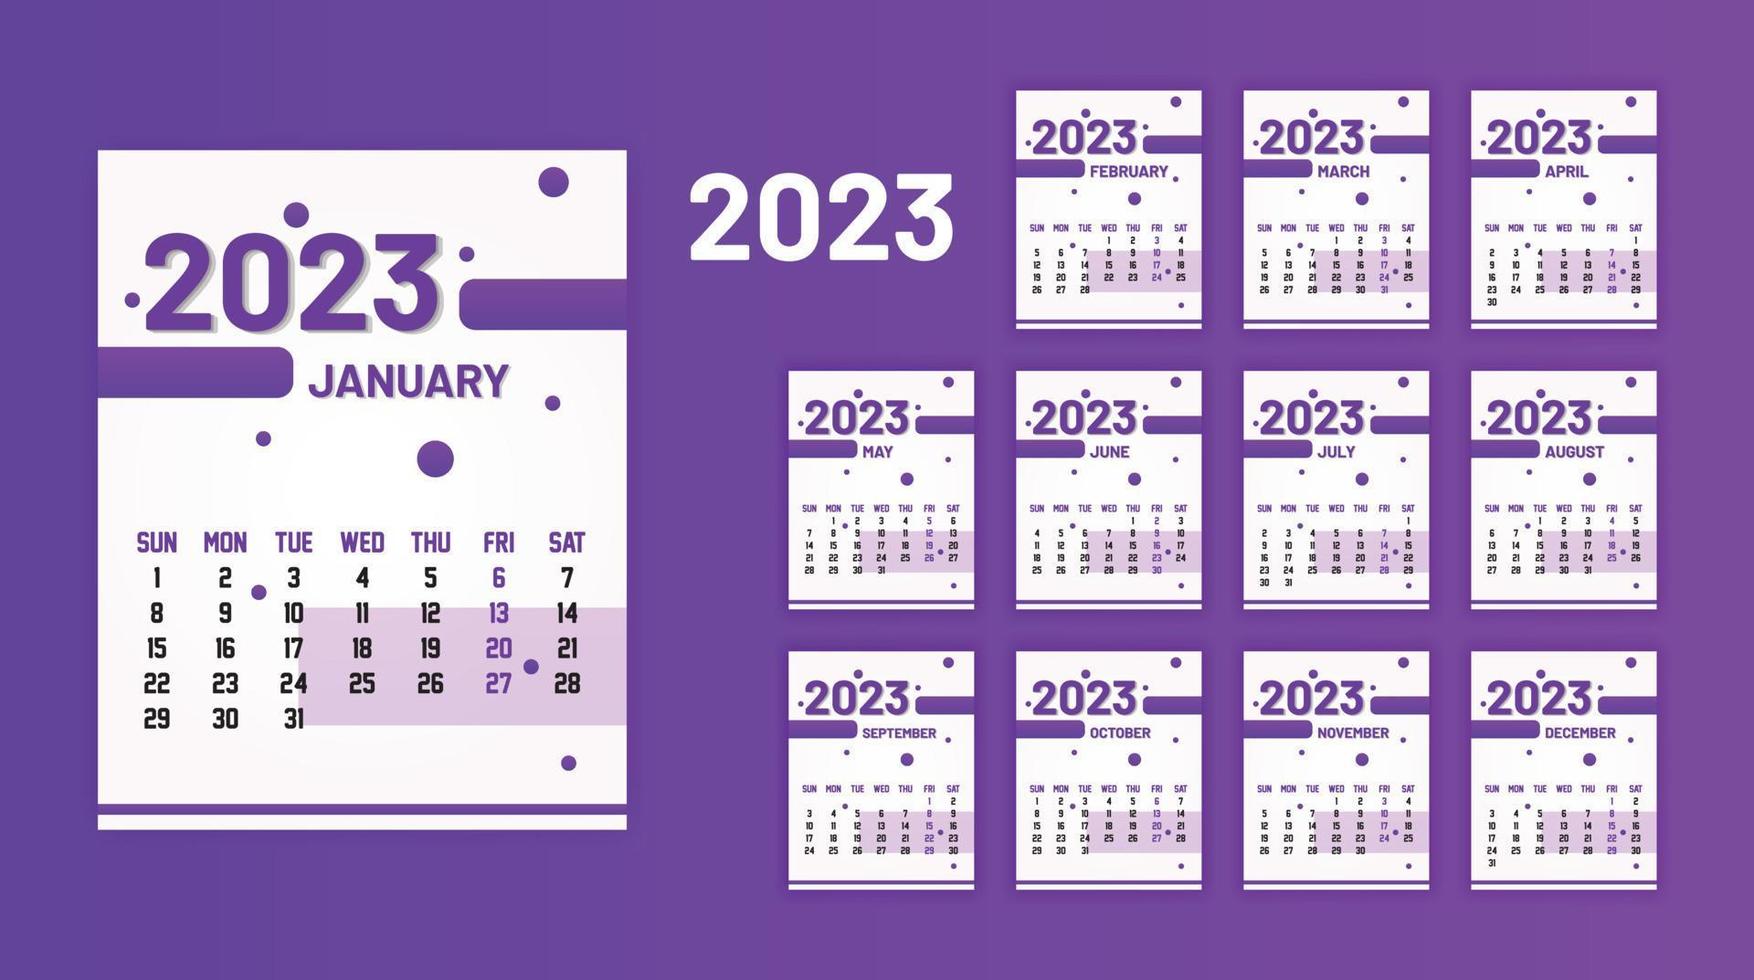 Jahreskalender 2023 druckfertige eps-Vektorvorlage, 12-Monats-Kalender. vektor